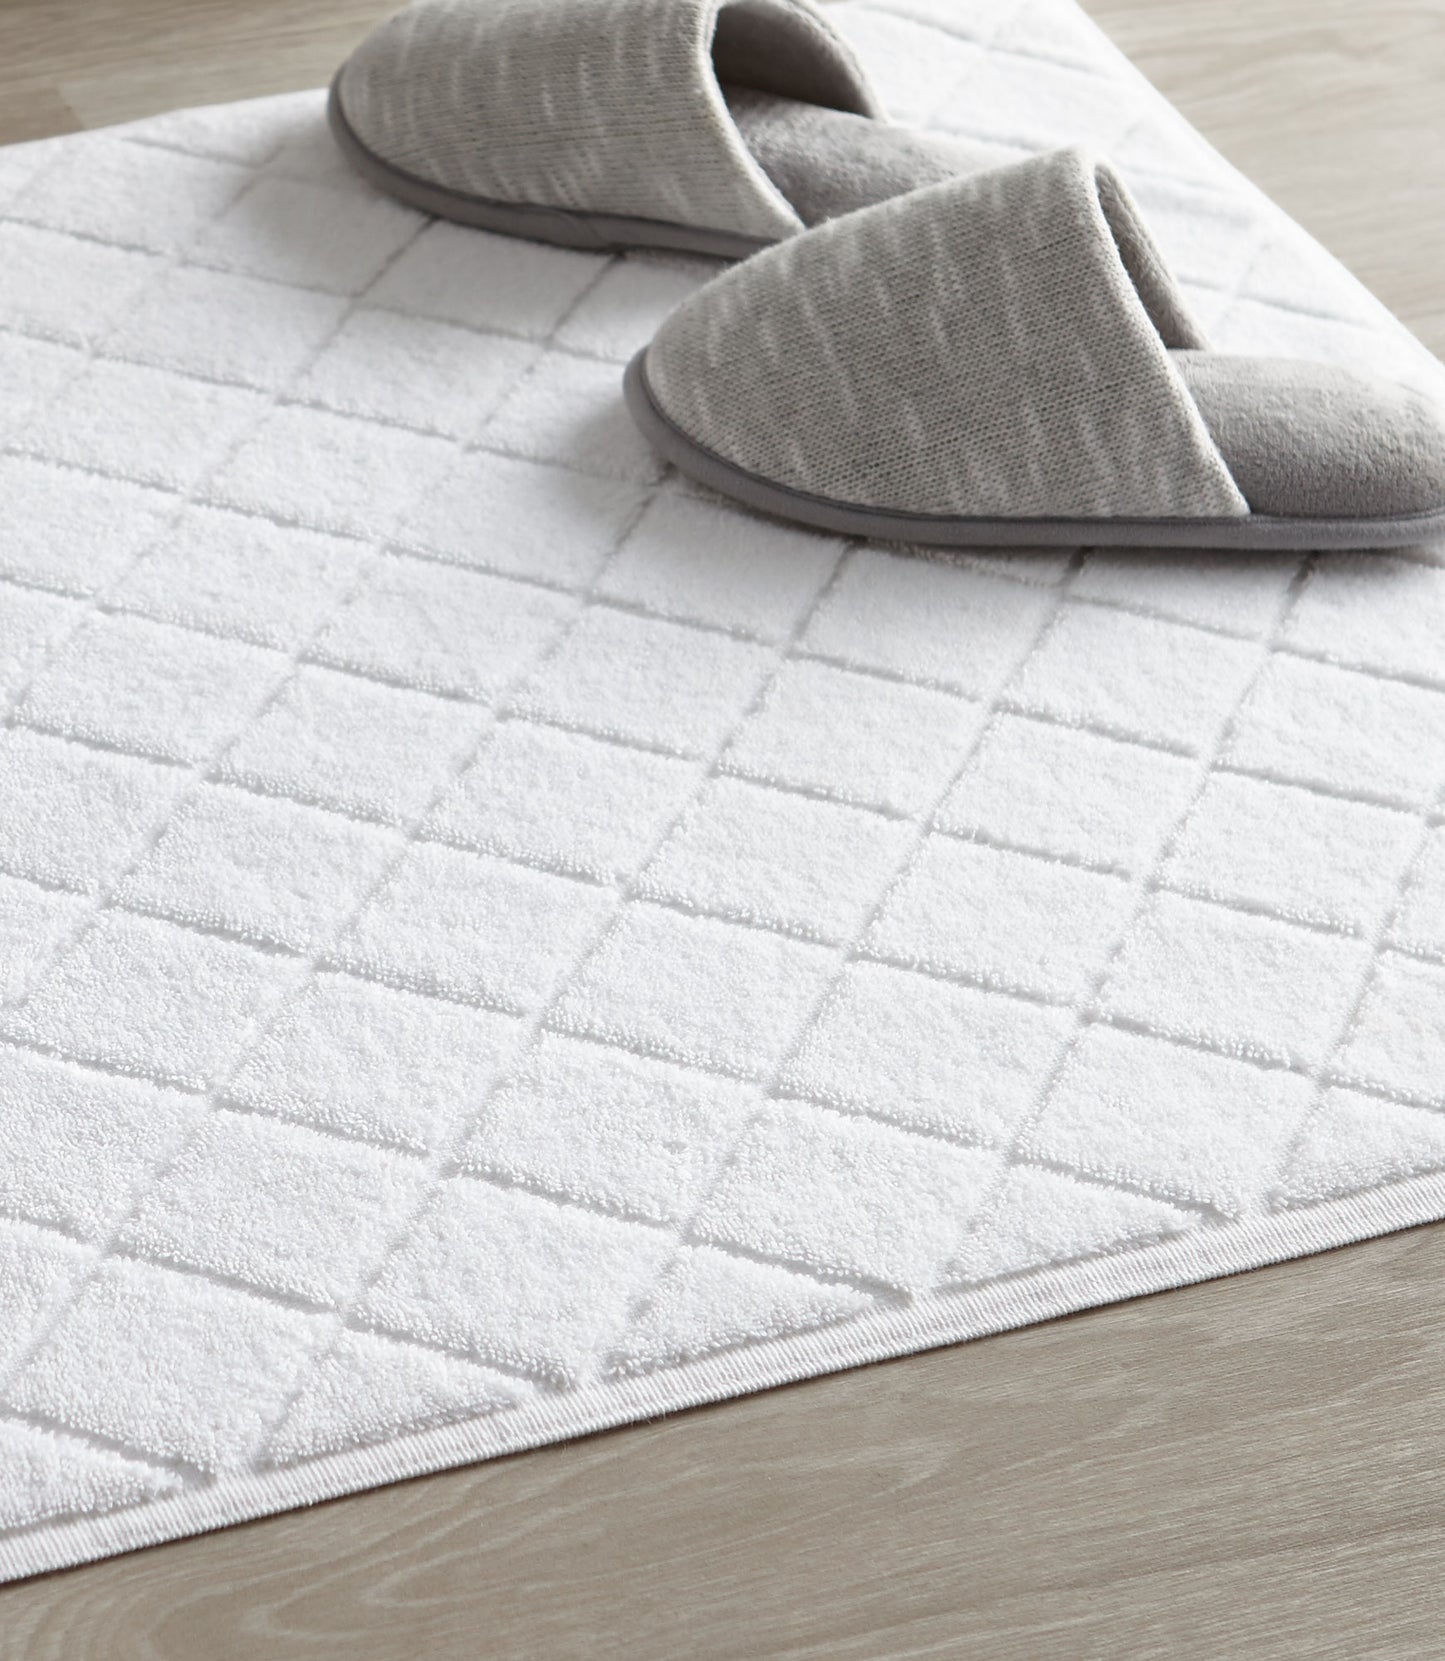 White slippers on top of lattice bath rug